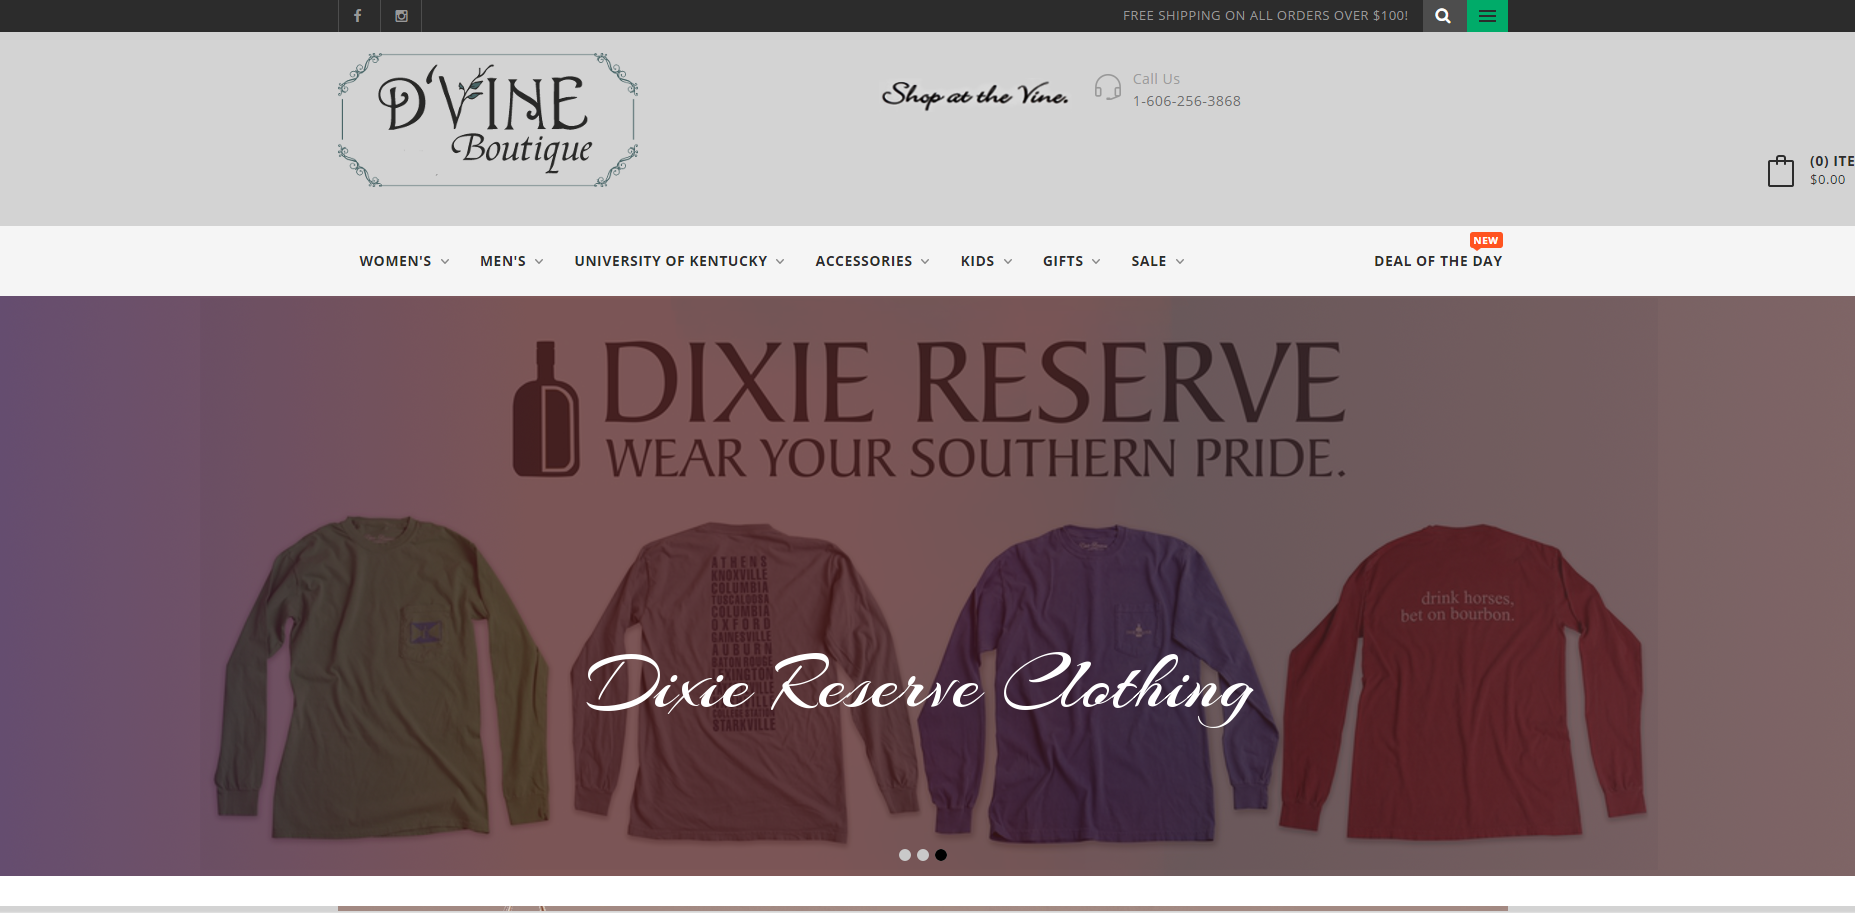 dvine Boutique Mount Vernon Kentucky Website Image 